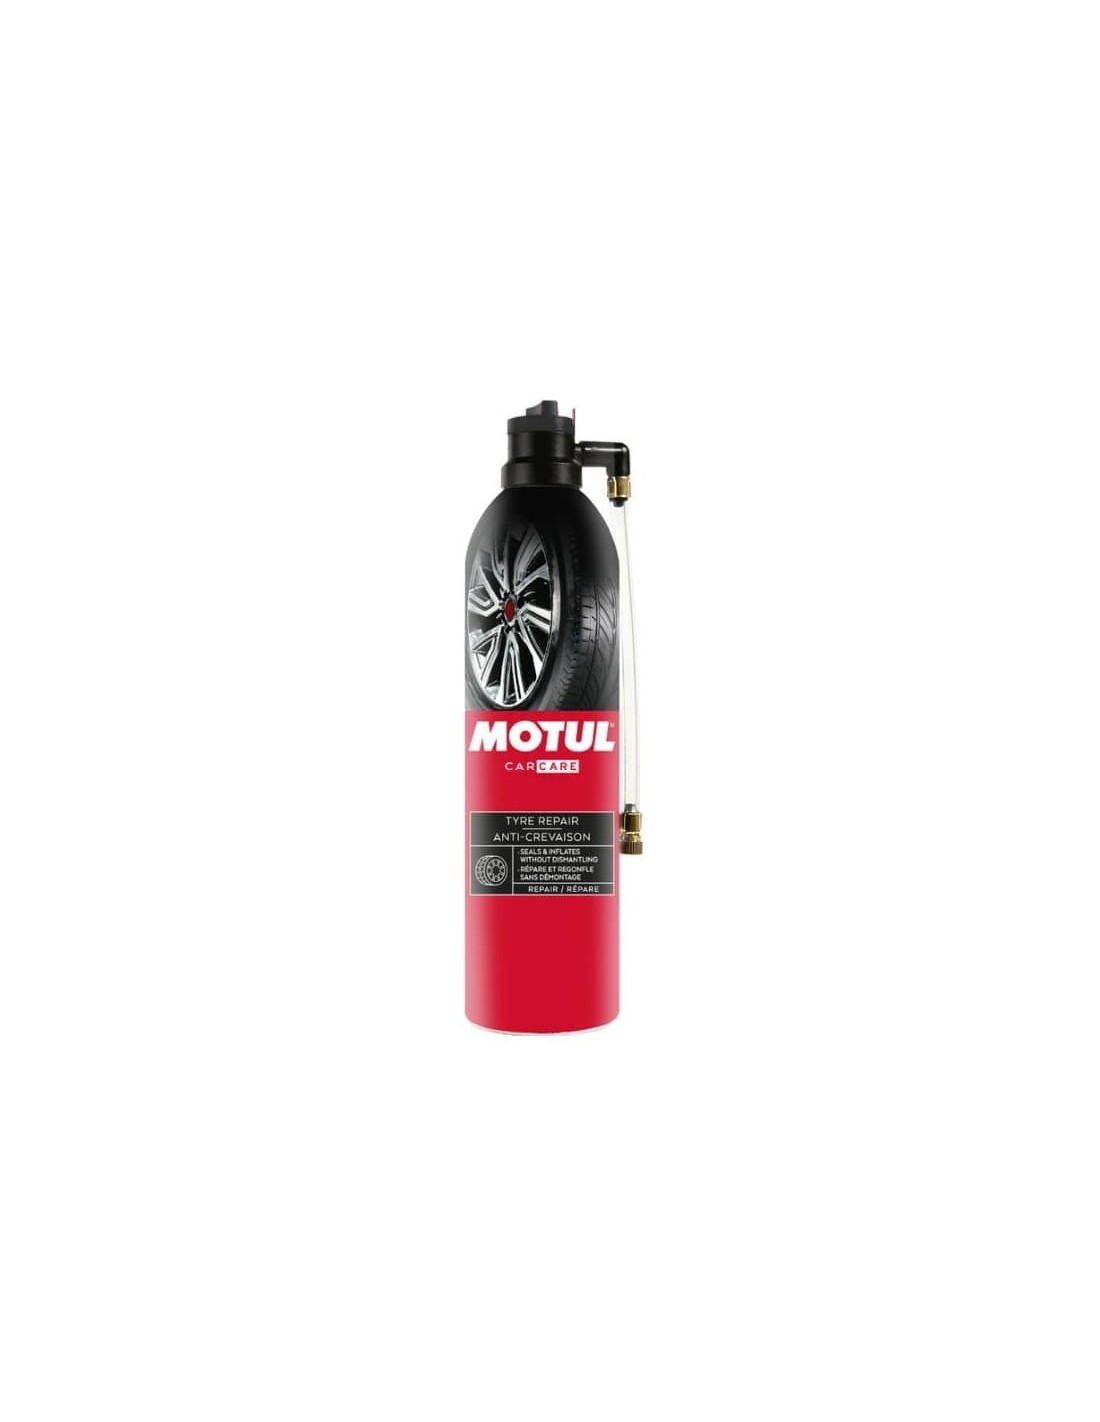 Spray Repara Pinchazos, Motul|500ml -12,90€-   Capacidad 500 ml